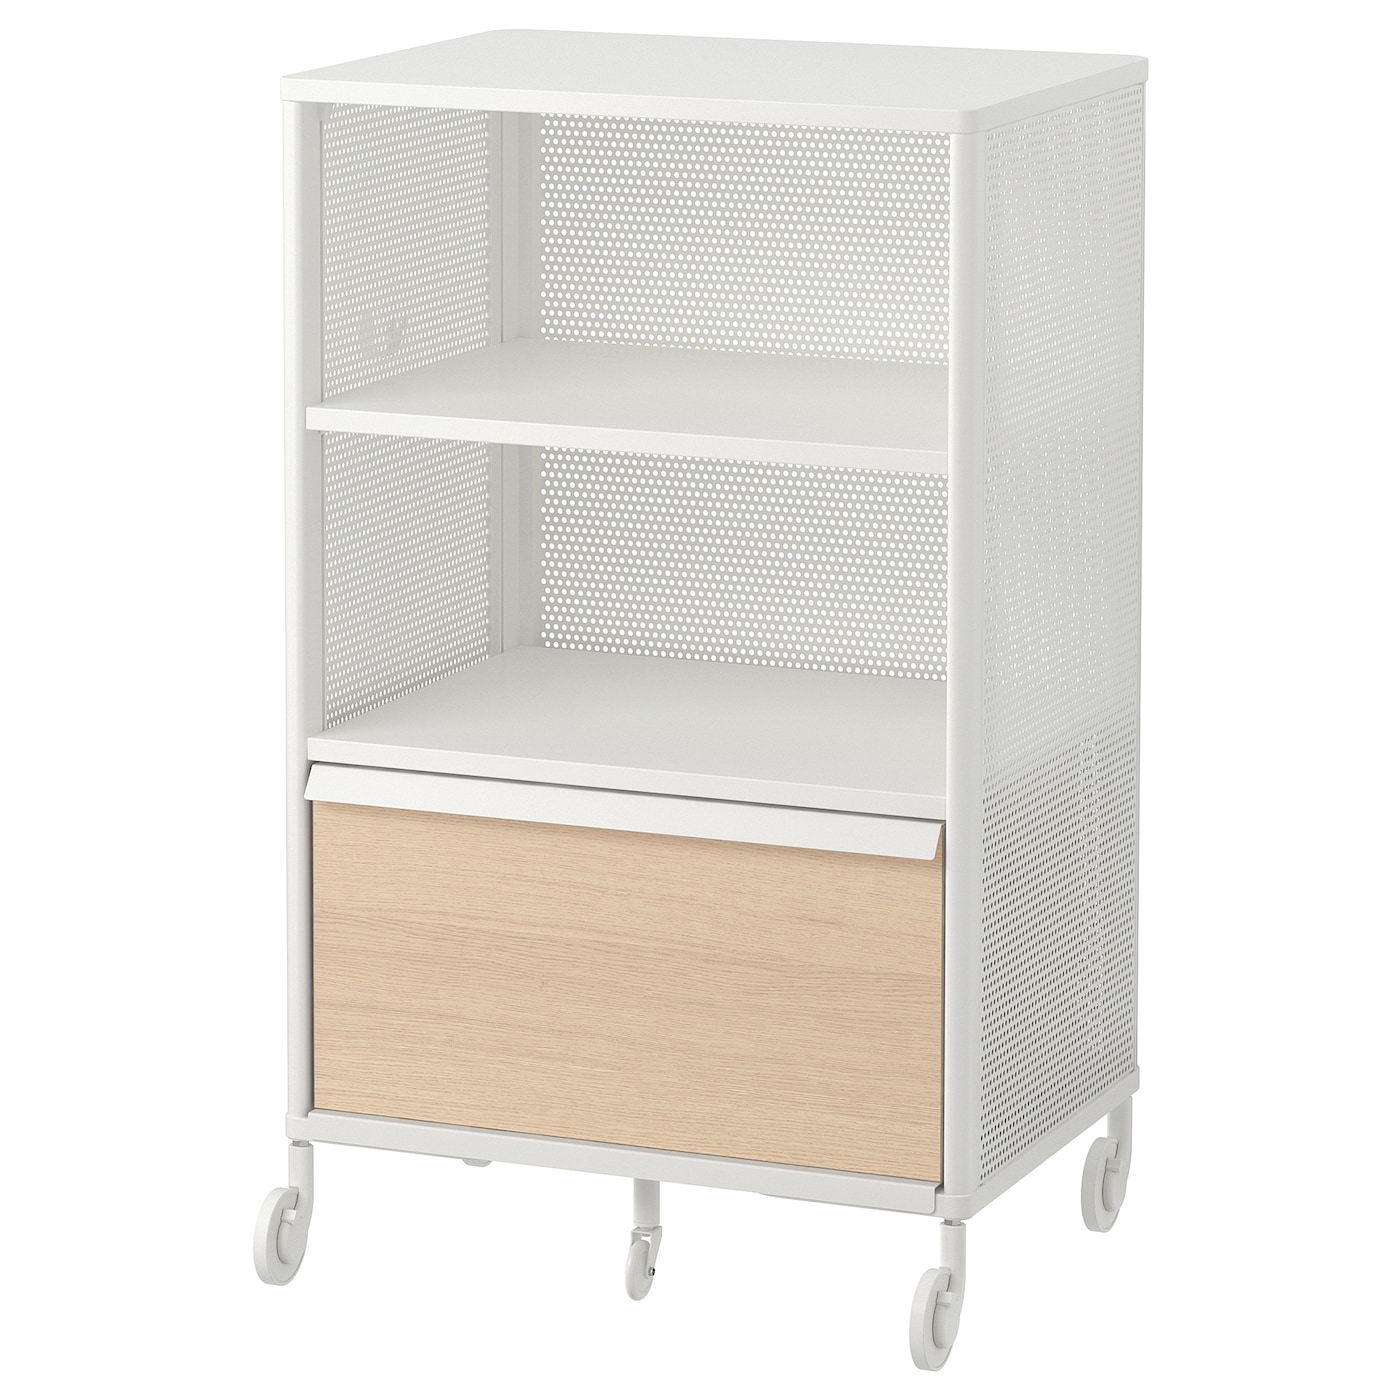 Офисный шкаф с умным замком - IKEA BEKANT, белый, 61х45х101 см, БЕКАНТ ИКЕА